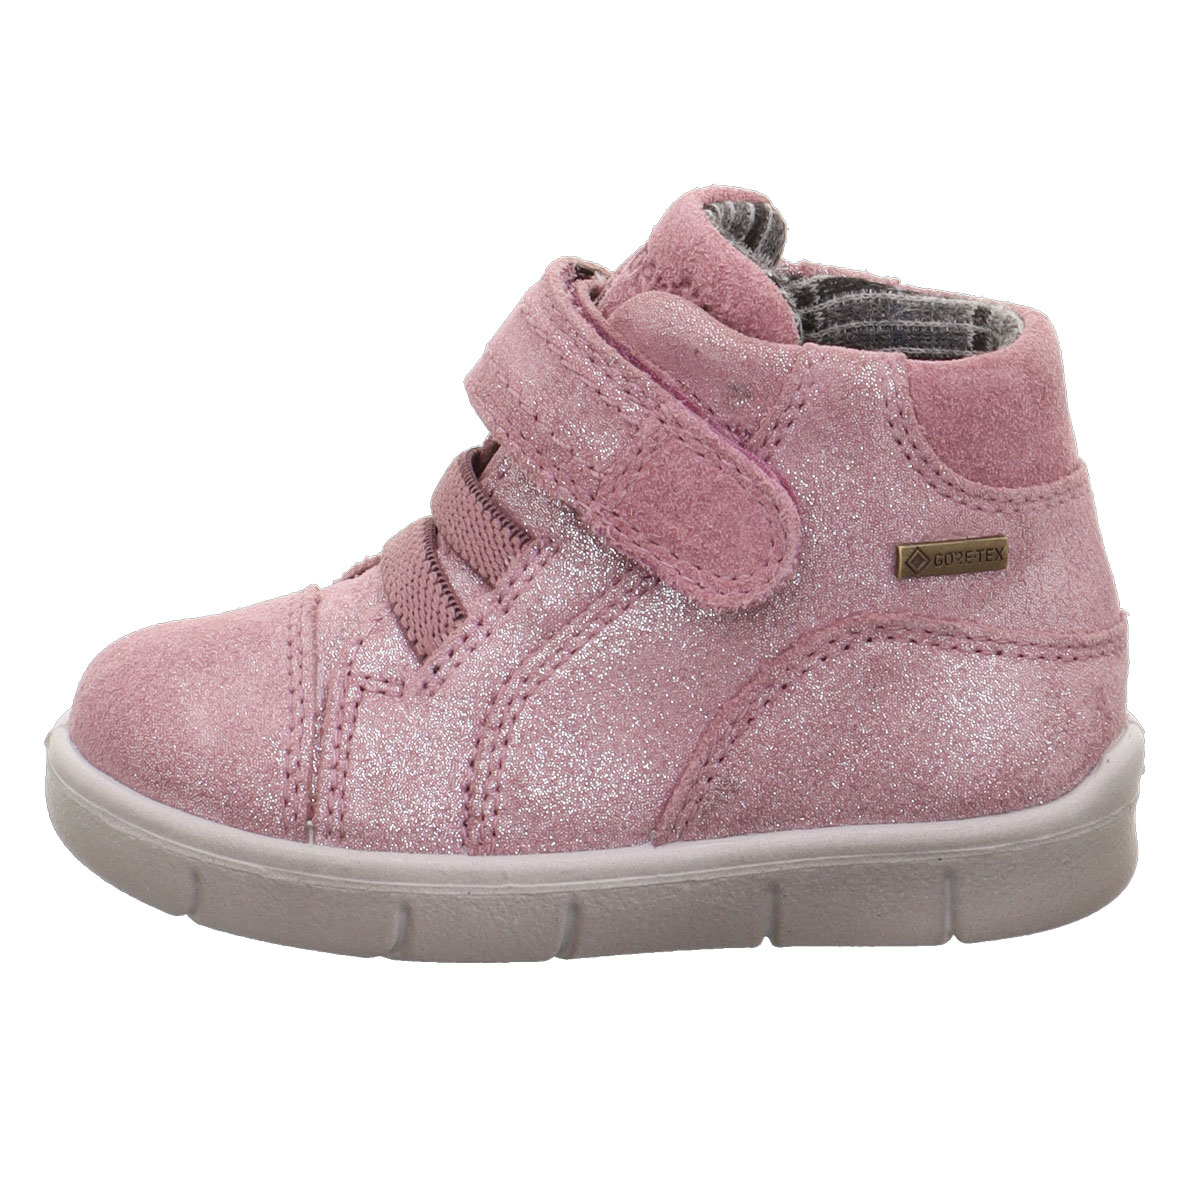 Superfit Ulli Bu Gtx Pink Glitter Kids Toddler Girls Boots 1009429-8510 In Size 25 In Plain Pink Glitter